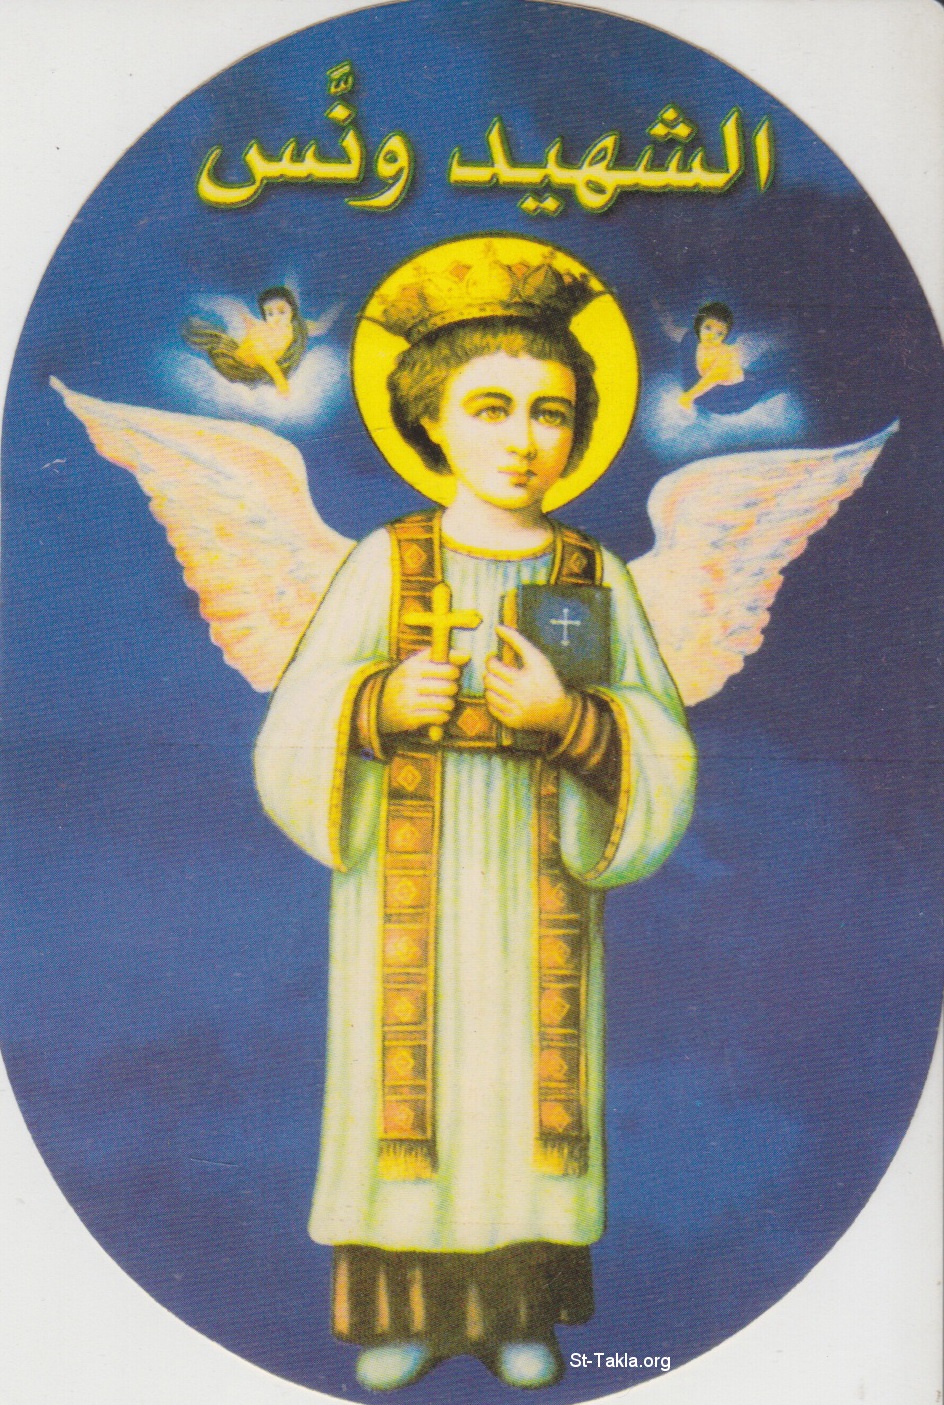 https://st-takla.org/Gallery/var/albums/Saints-and-Figures/27-Waw/Saint-Wannas/www-St-Takla-org--Coptic-Saints-Saint-Wannas-03.jpg?m=1419425518